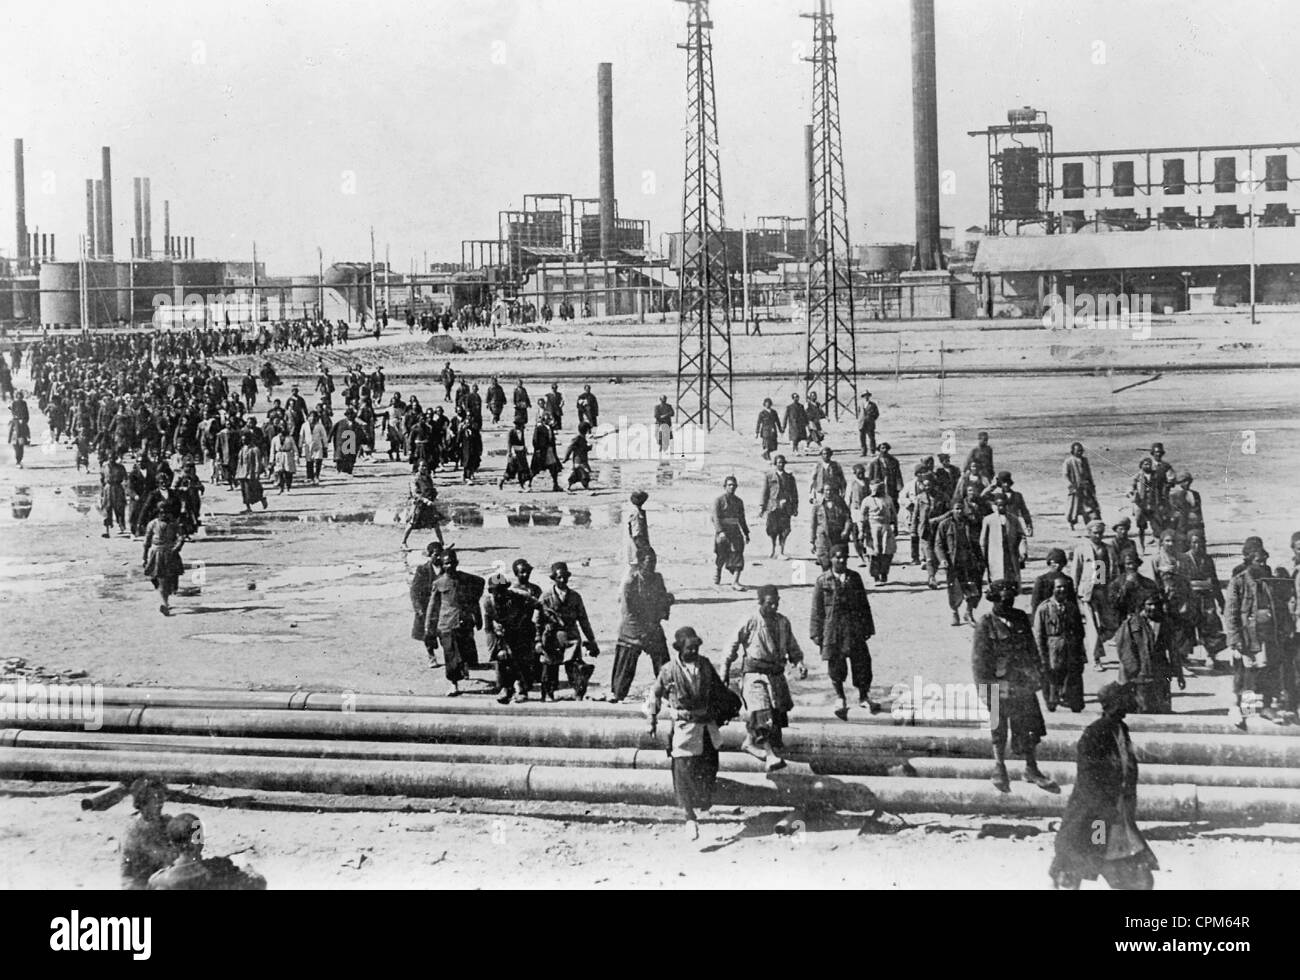 Oil production in Iran, 1932 Stock Photo